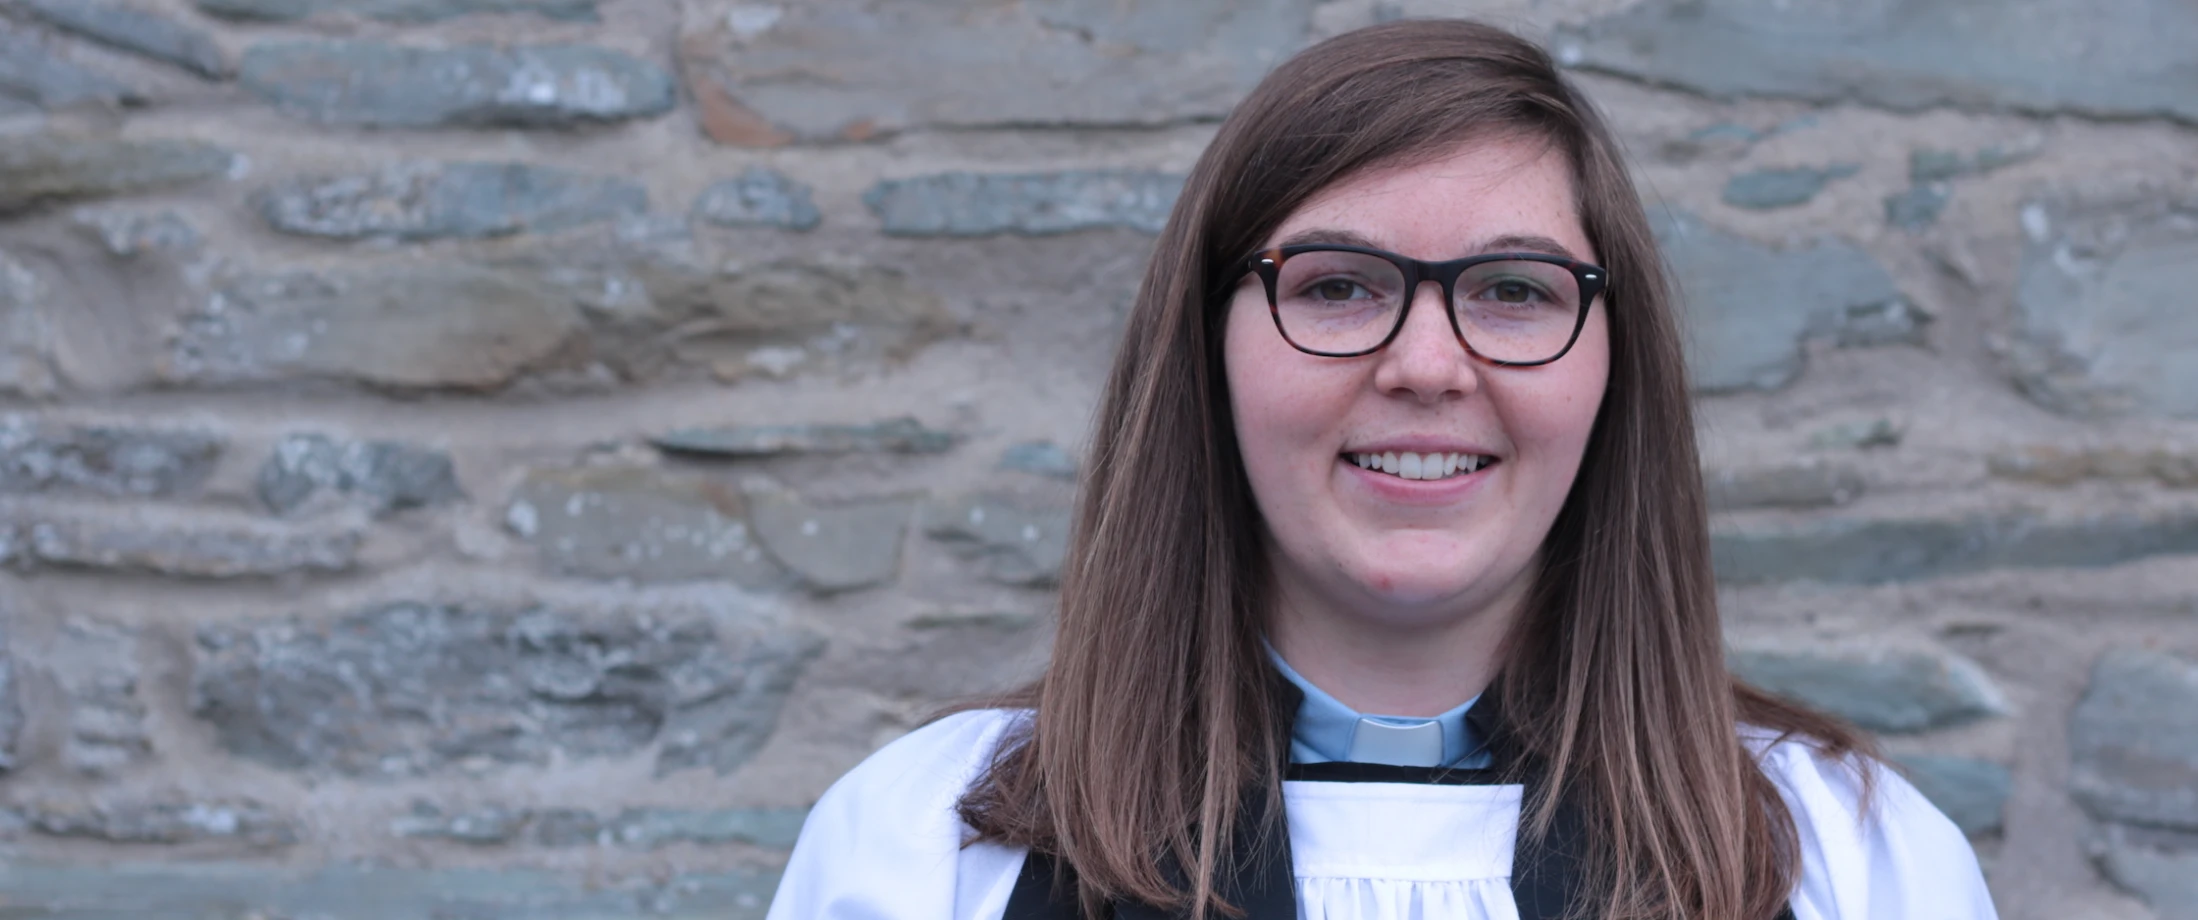 Anna Williams is ordained deacon